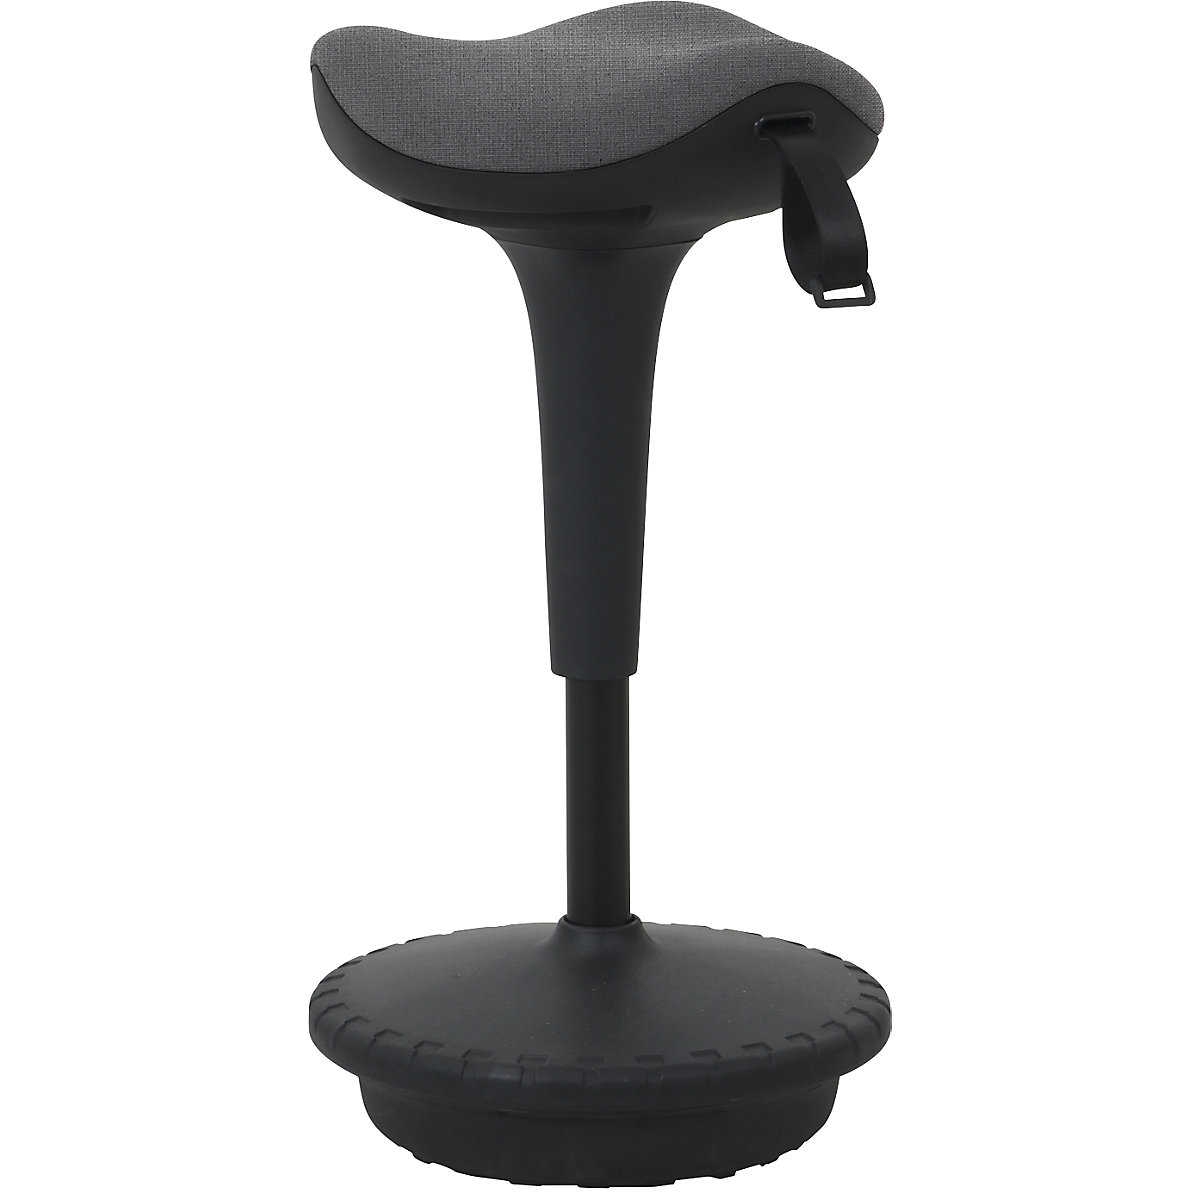 Anti-fatigue stool 6156 – Twinco, triangular seat 325 mm, grey cover